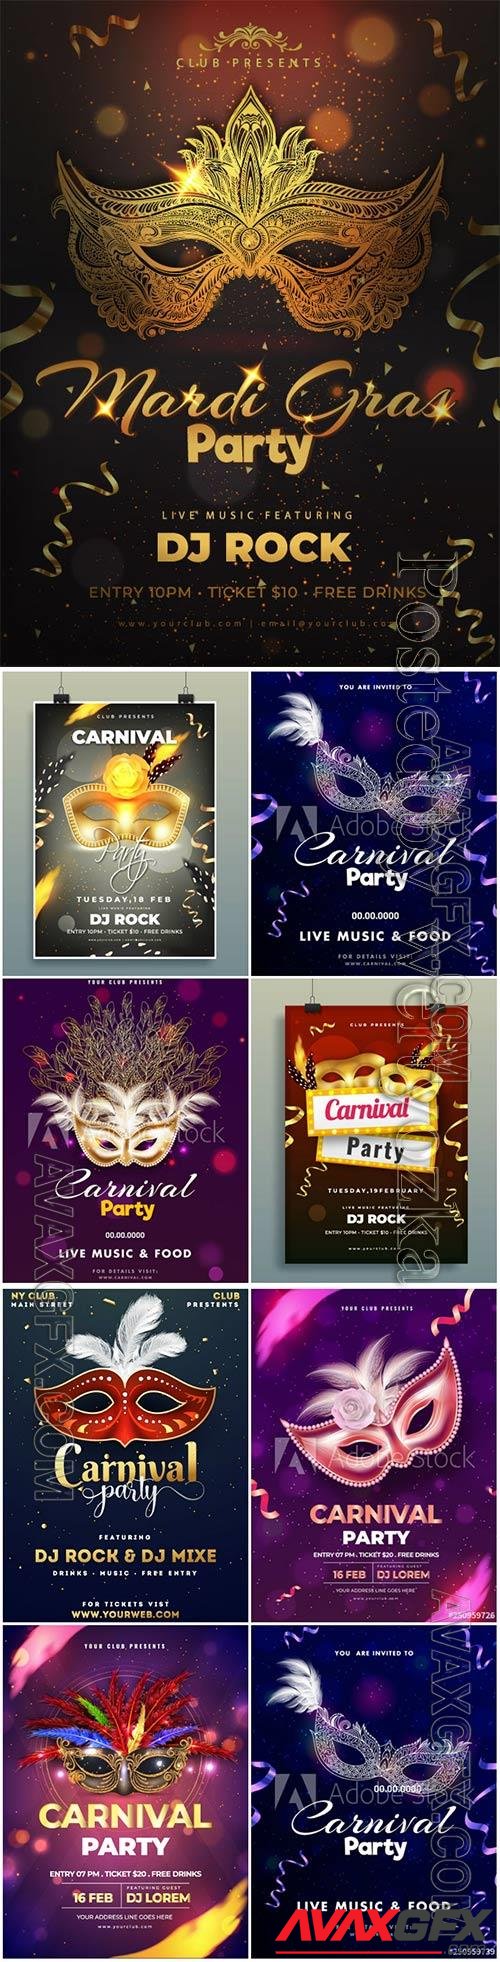 Mardi gras carnival poster, Venice carnival vector design vol 4